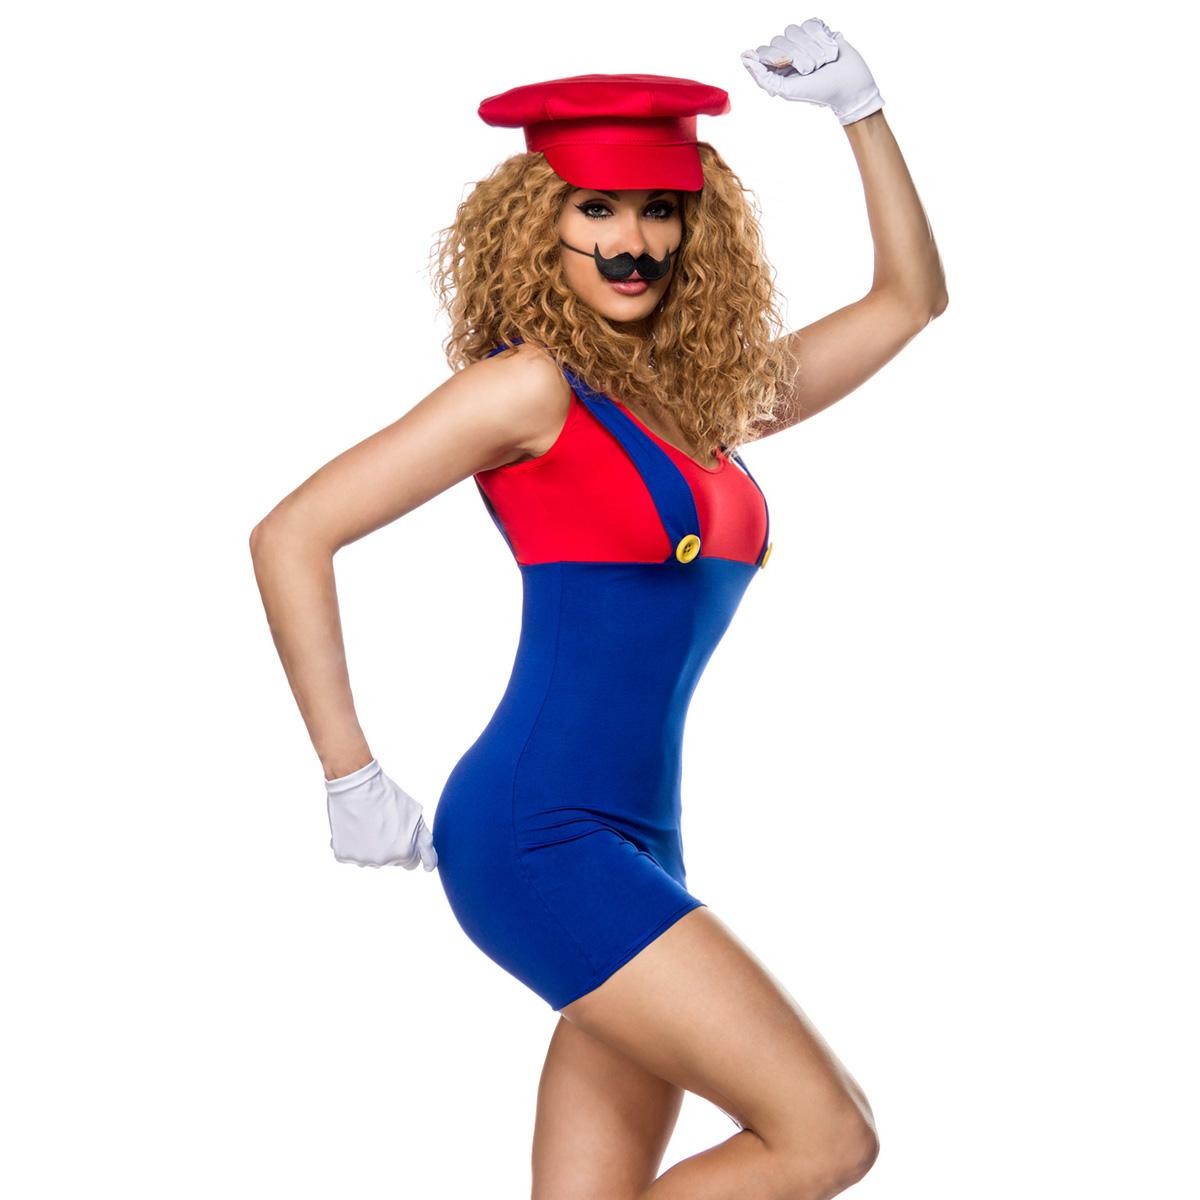  Mario  Kostüm  -  rot/blau/weiß 